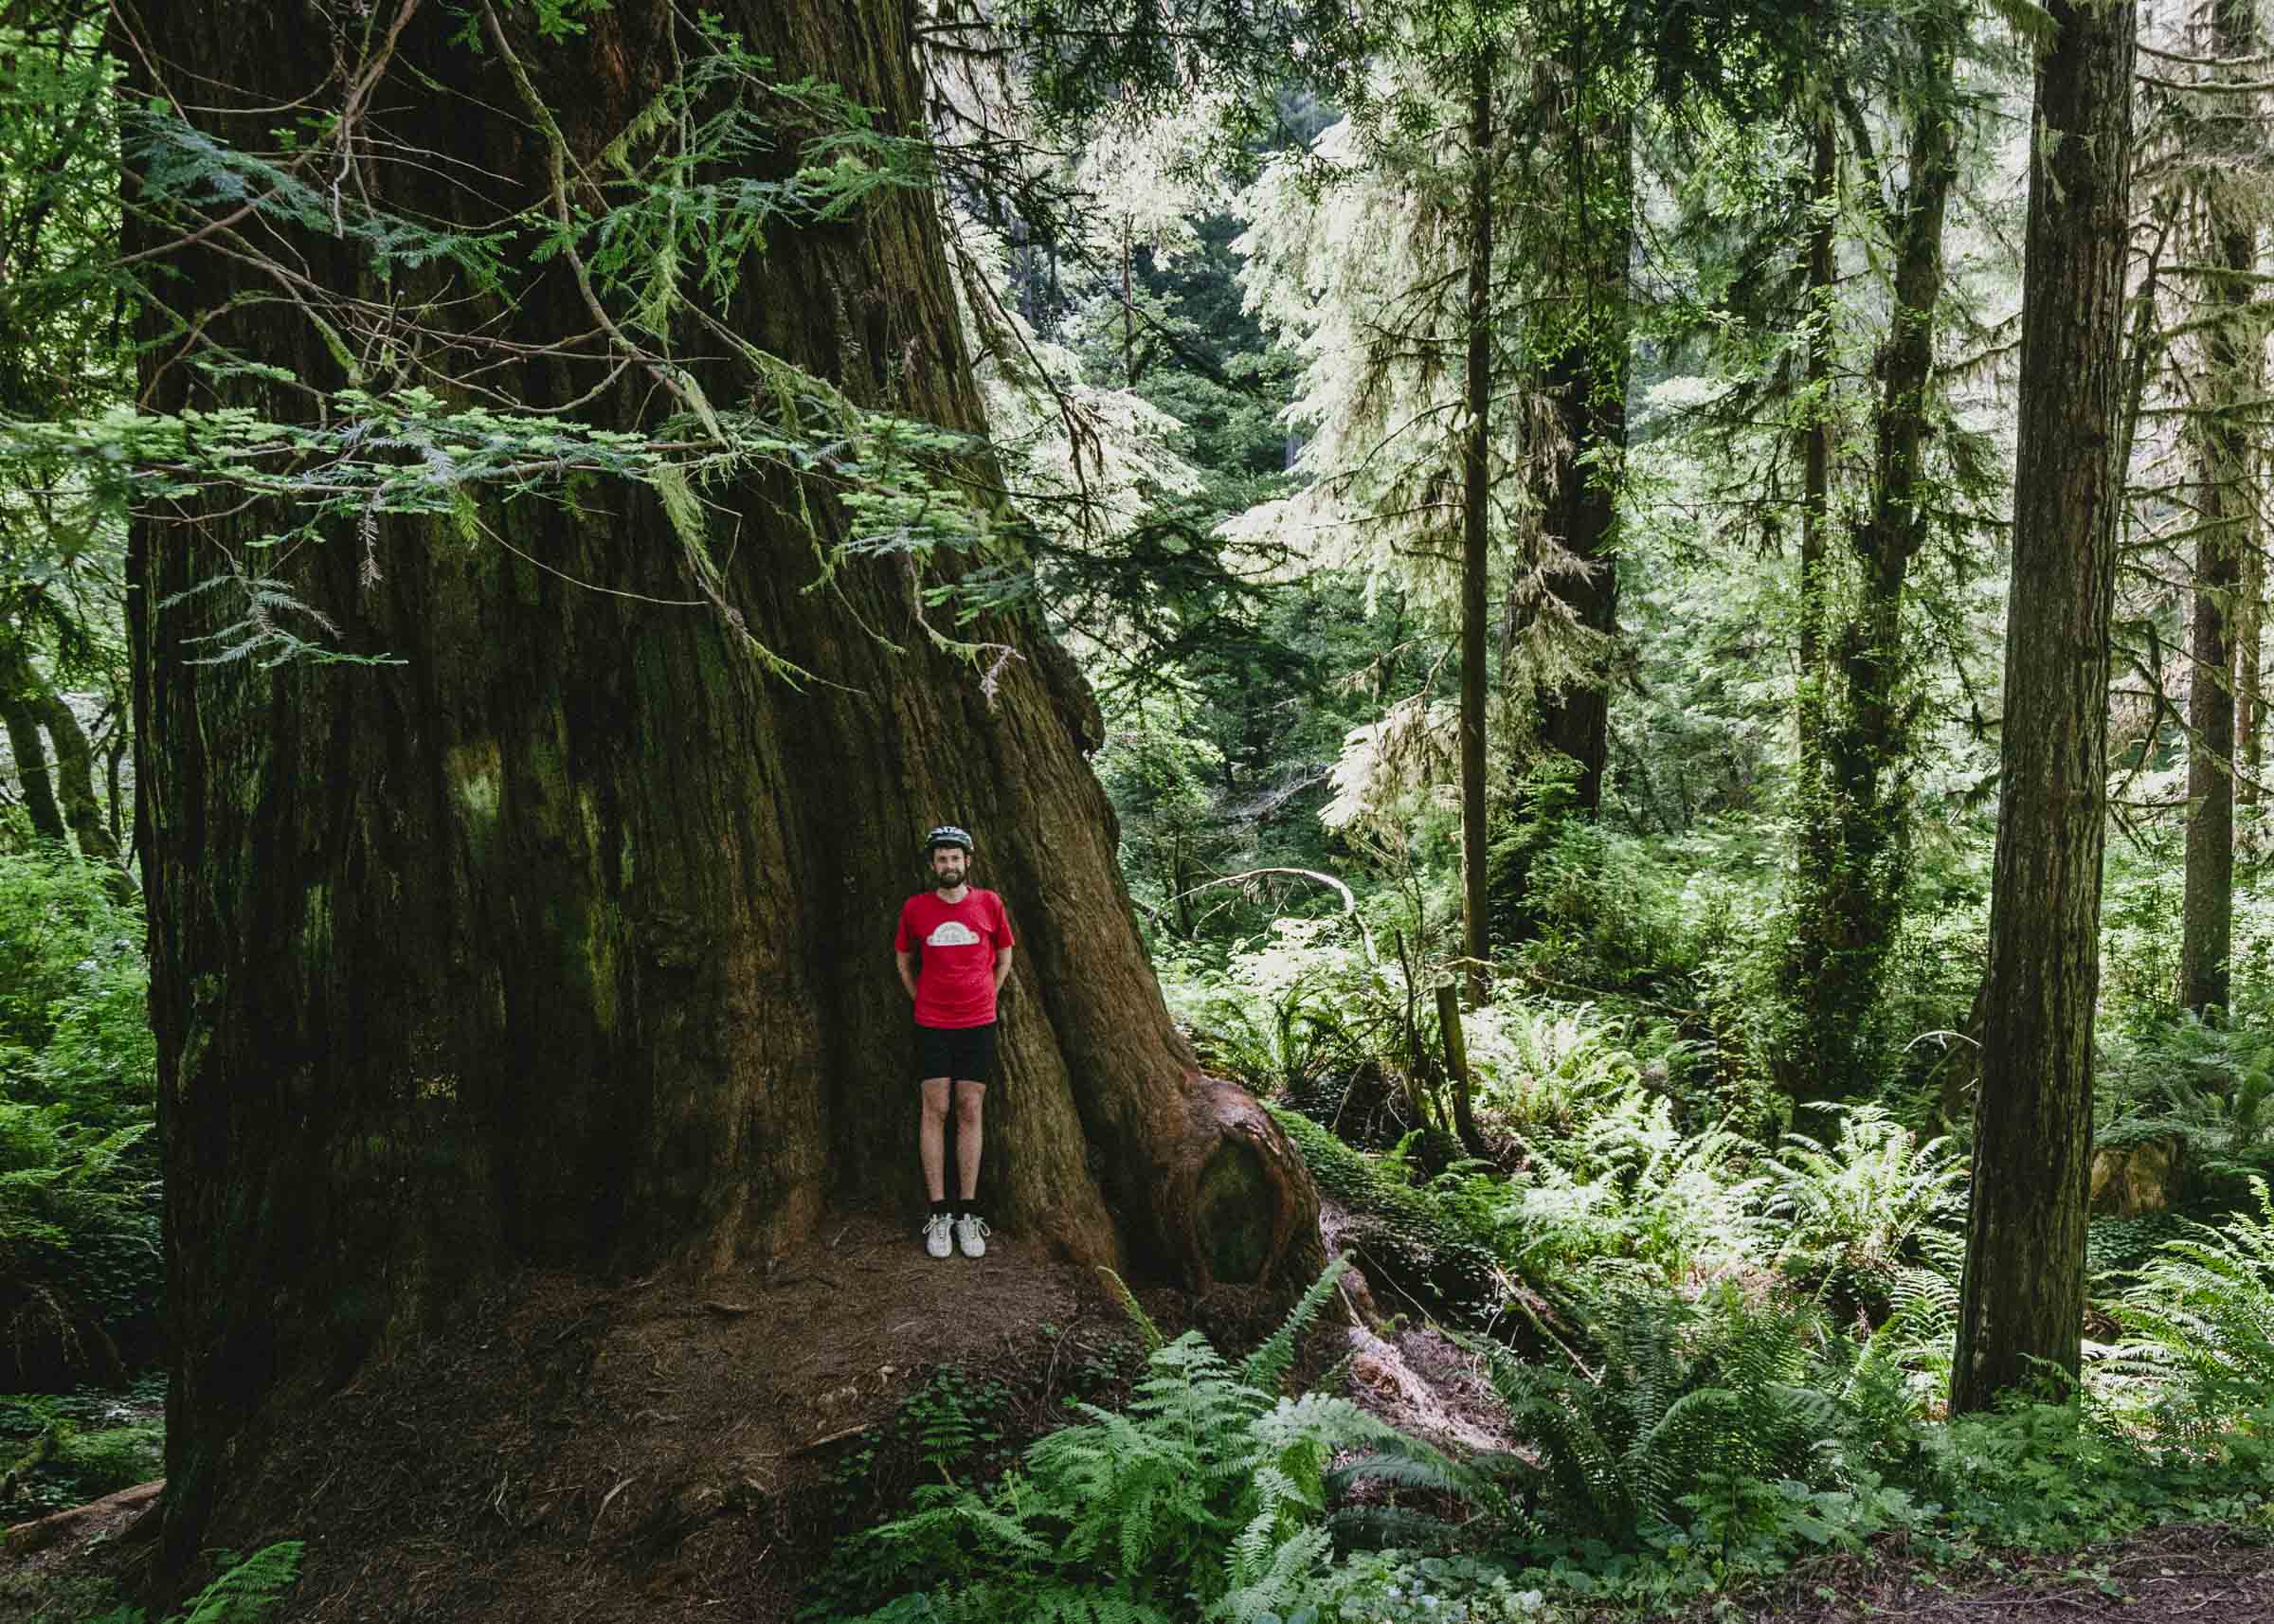 Posing beside a redwood giant in California